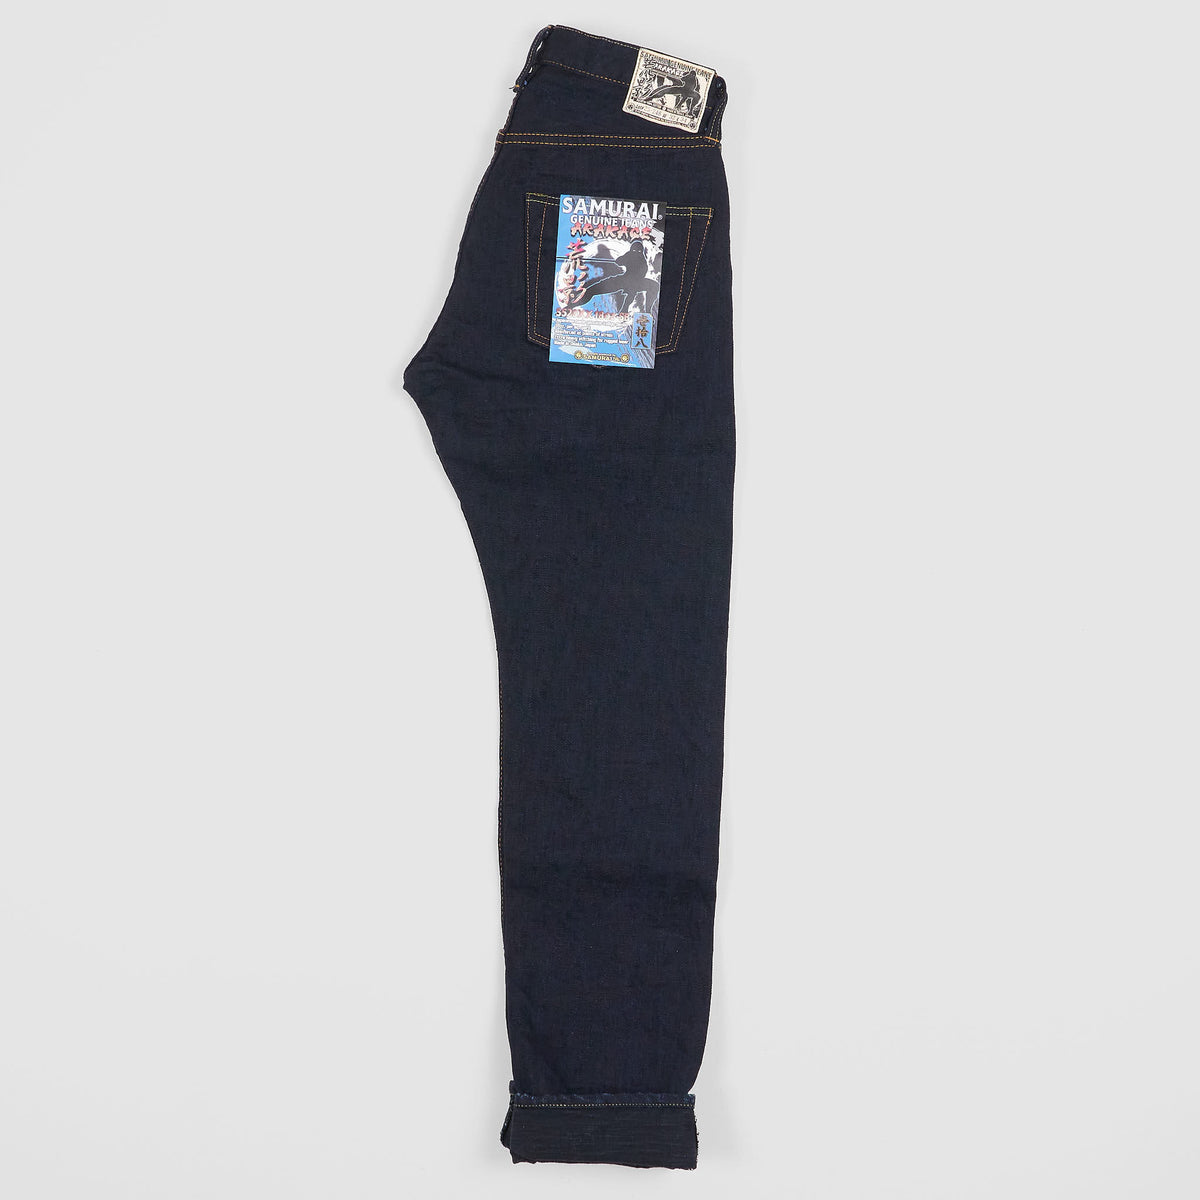 Samurai Jeans 18oz S520XX Deep Blue Arakage Tapered Slub Denim Selvage Jeans